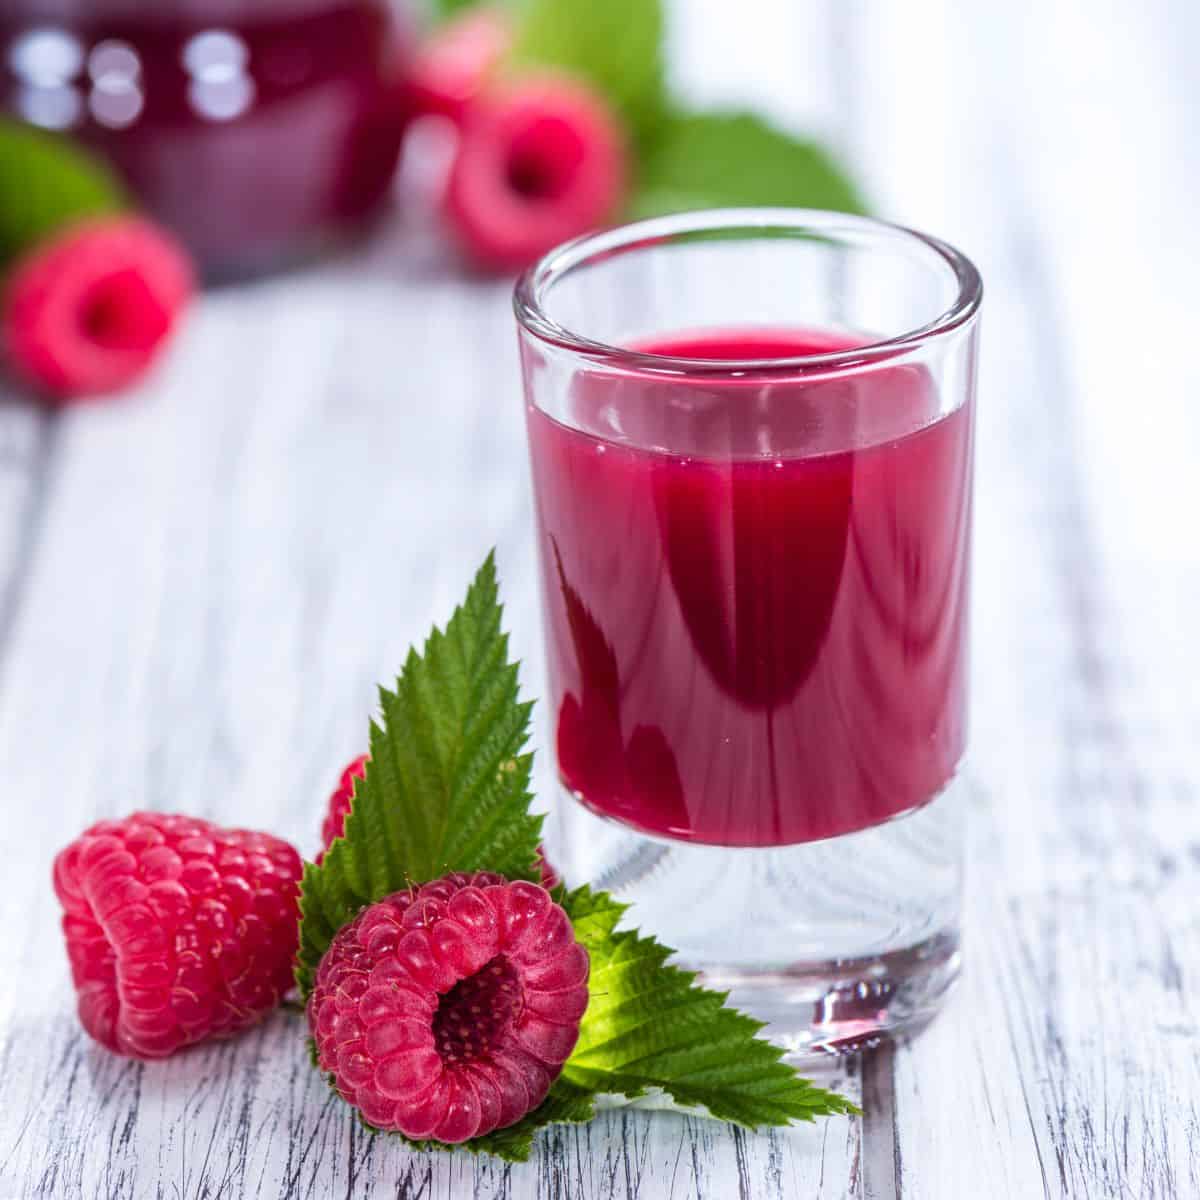 Black raspberry liqueur in a shot glass with raspberries around it.